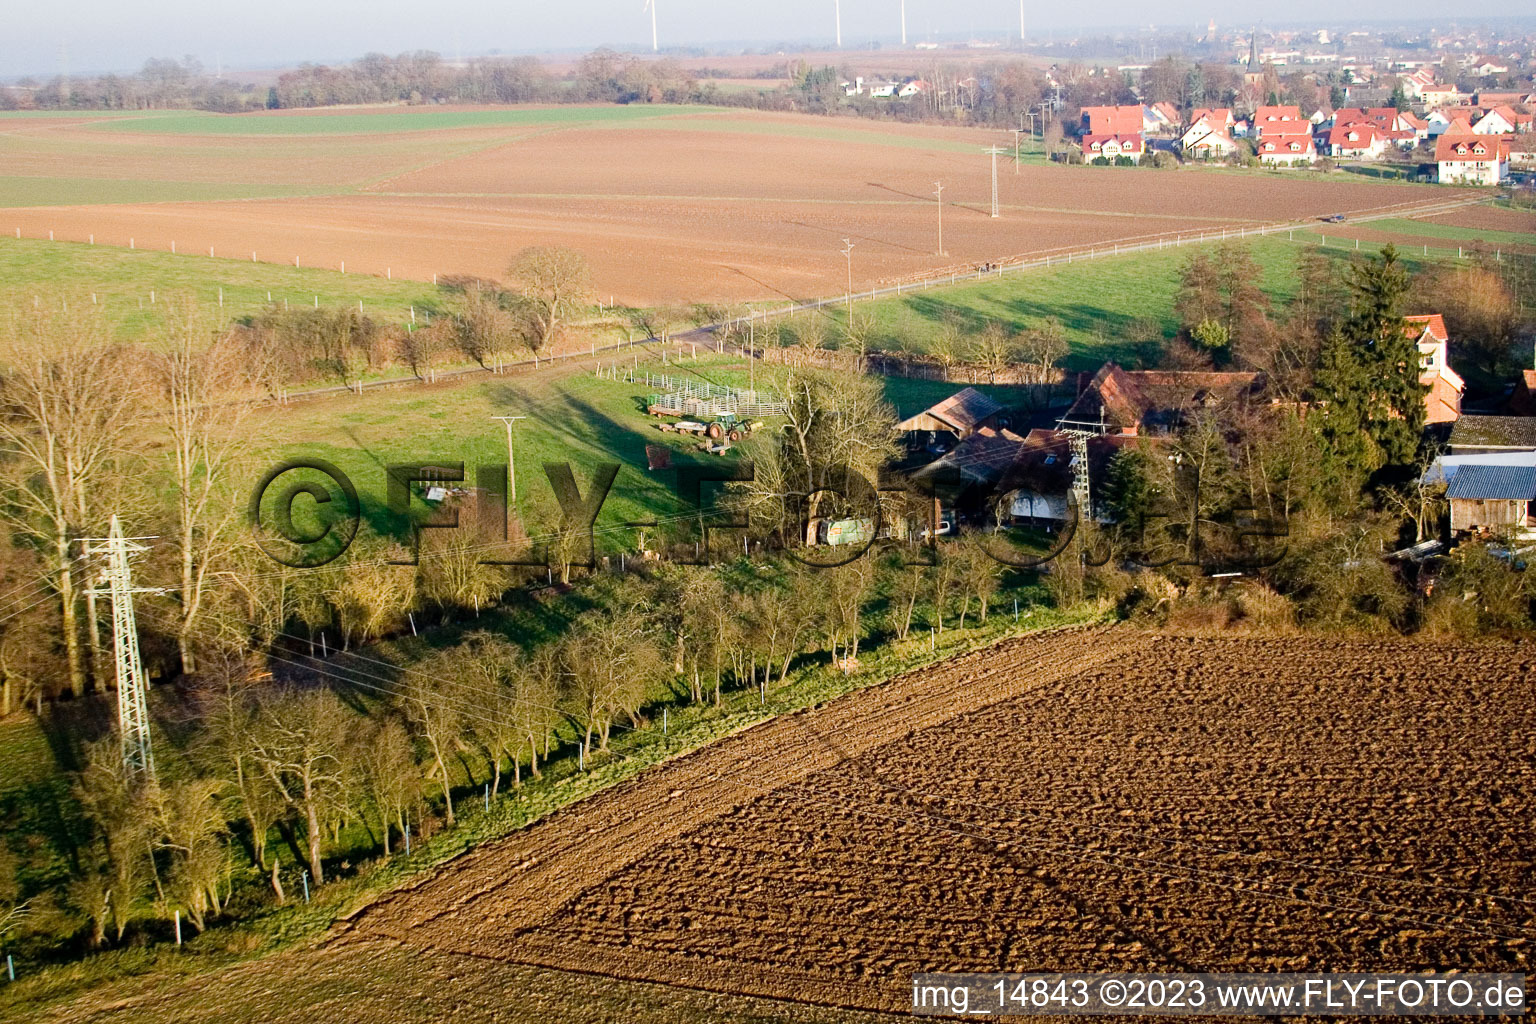 Drone recording of Schaidter mill in the district Schaidt in Wörth am Rhein in the state Rhineland-Palatinate, Germany